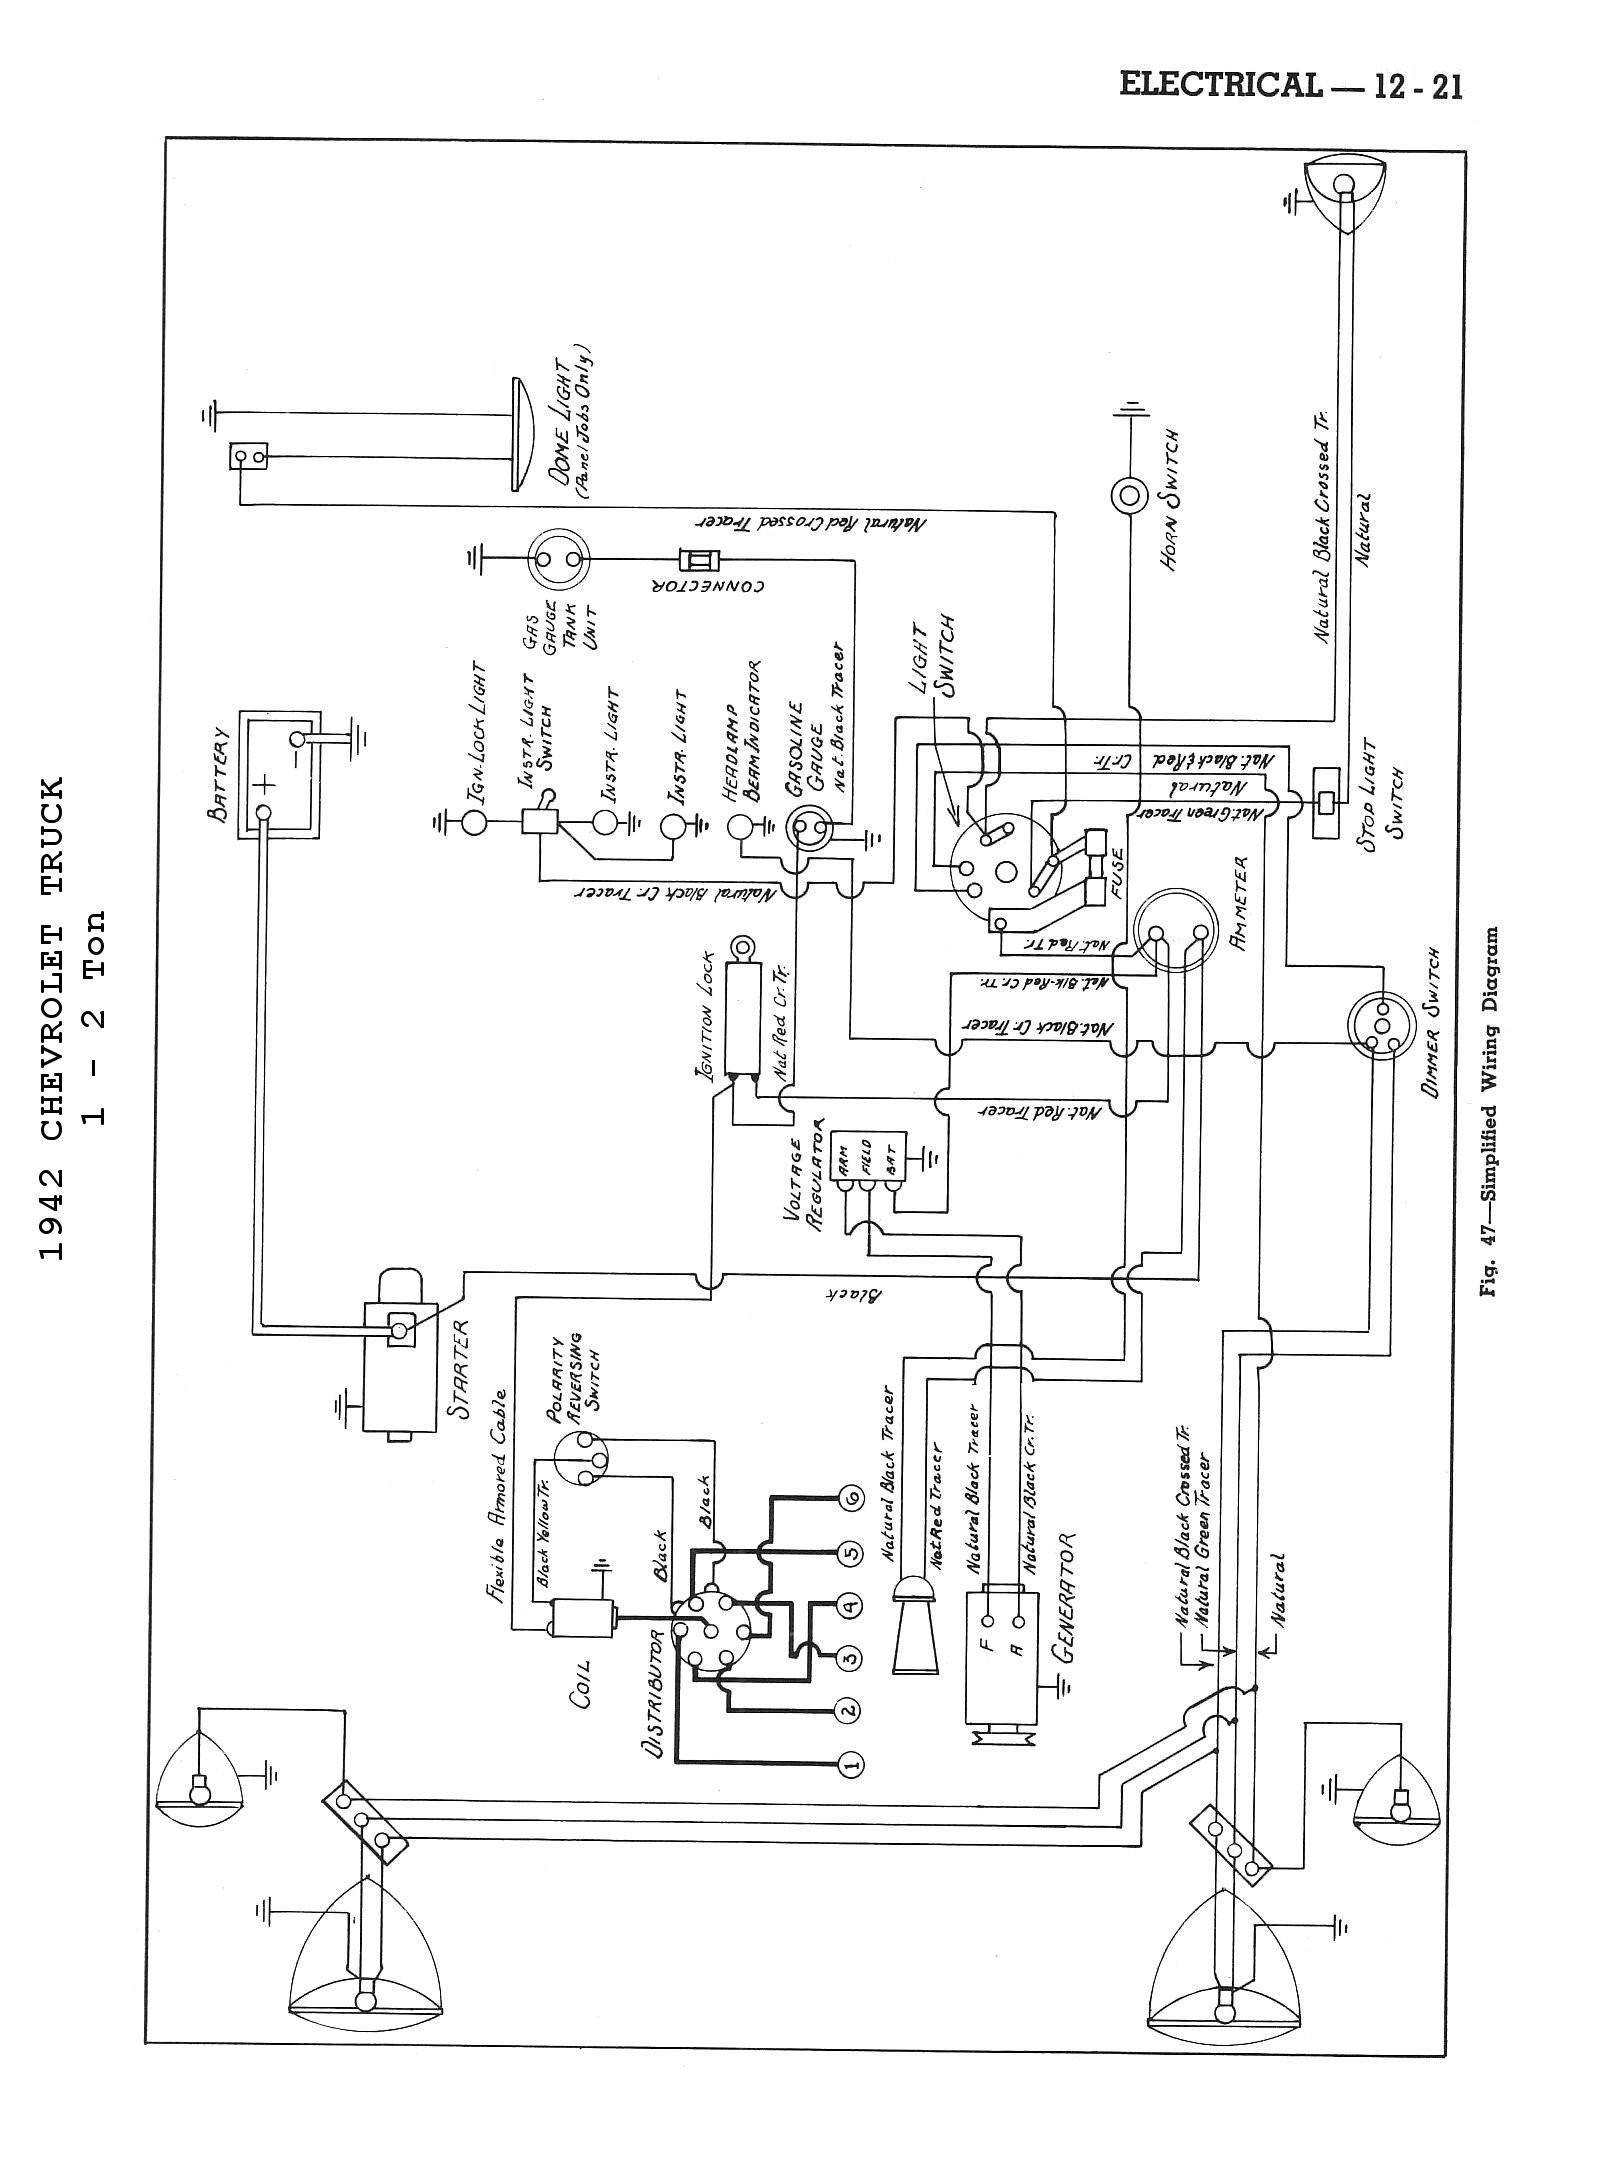 1957 Chevy Truck Wiring Diagram from detoxicrecenze.com